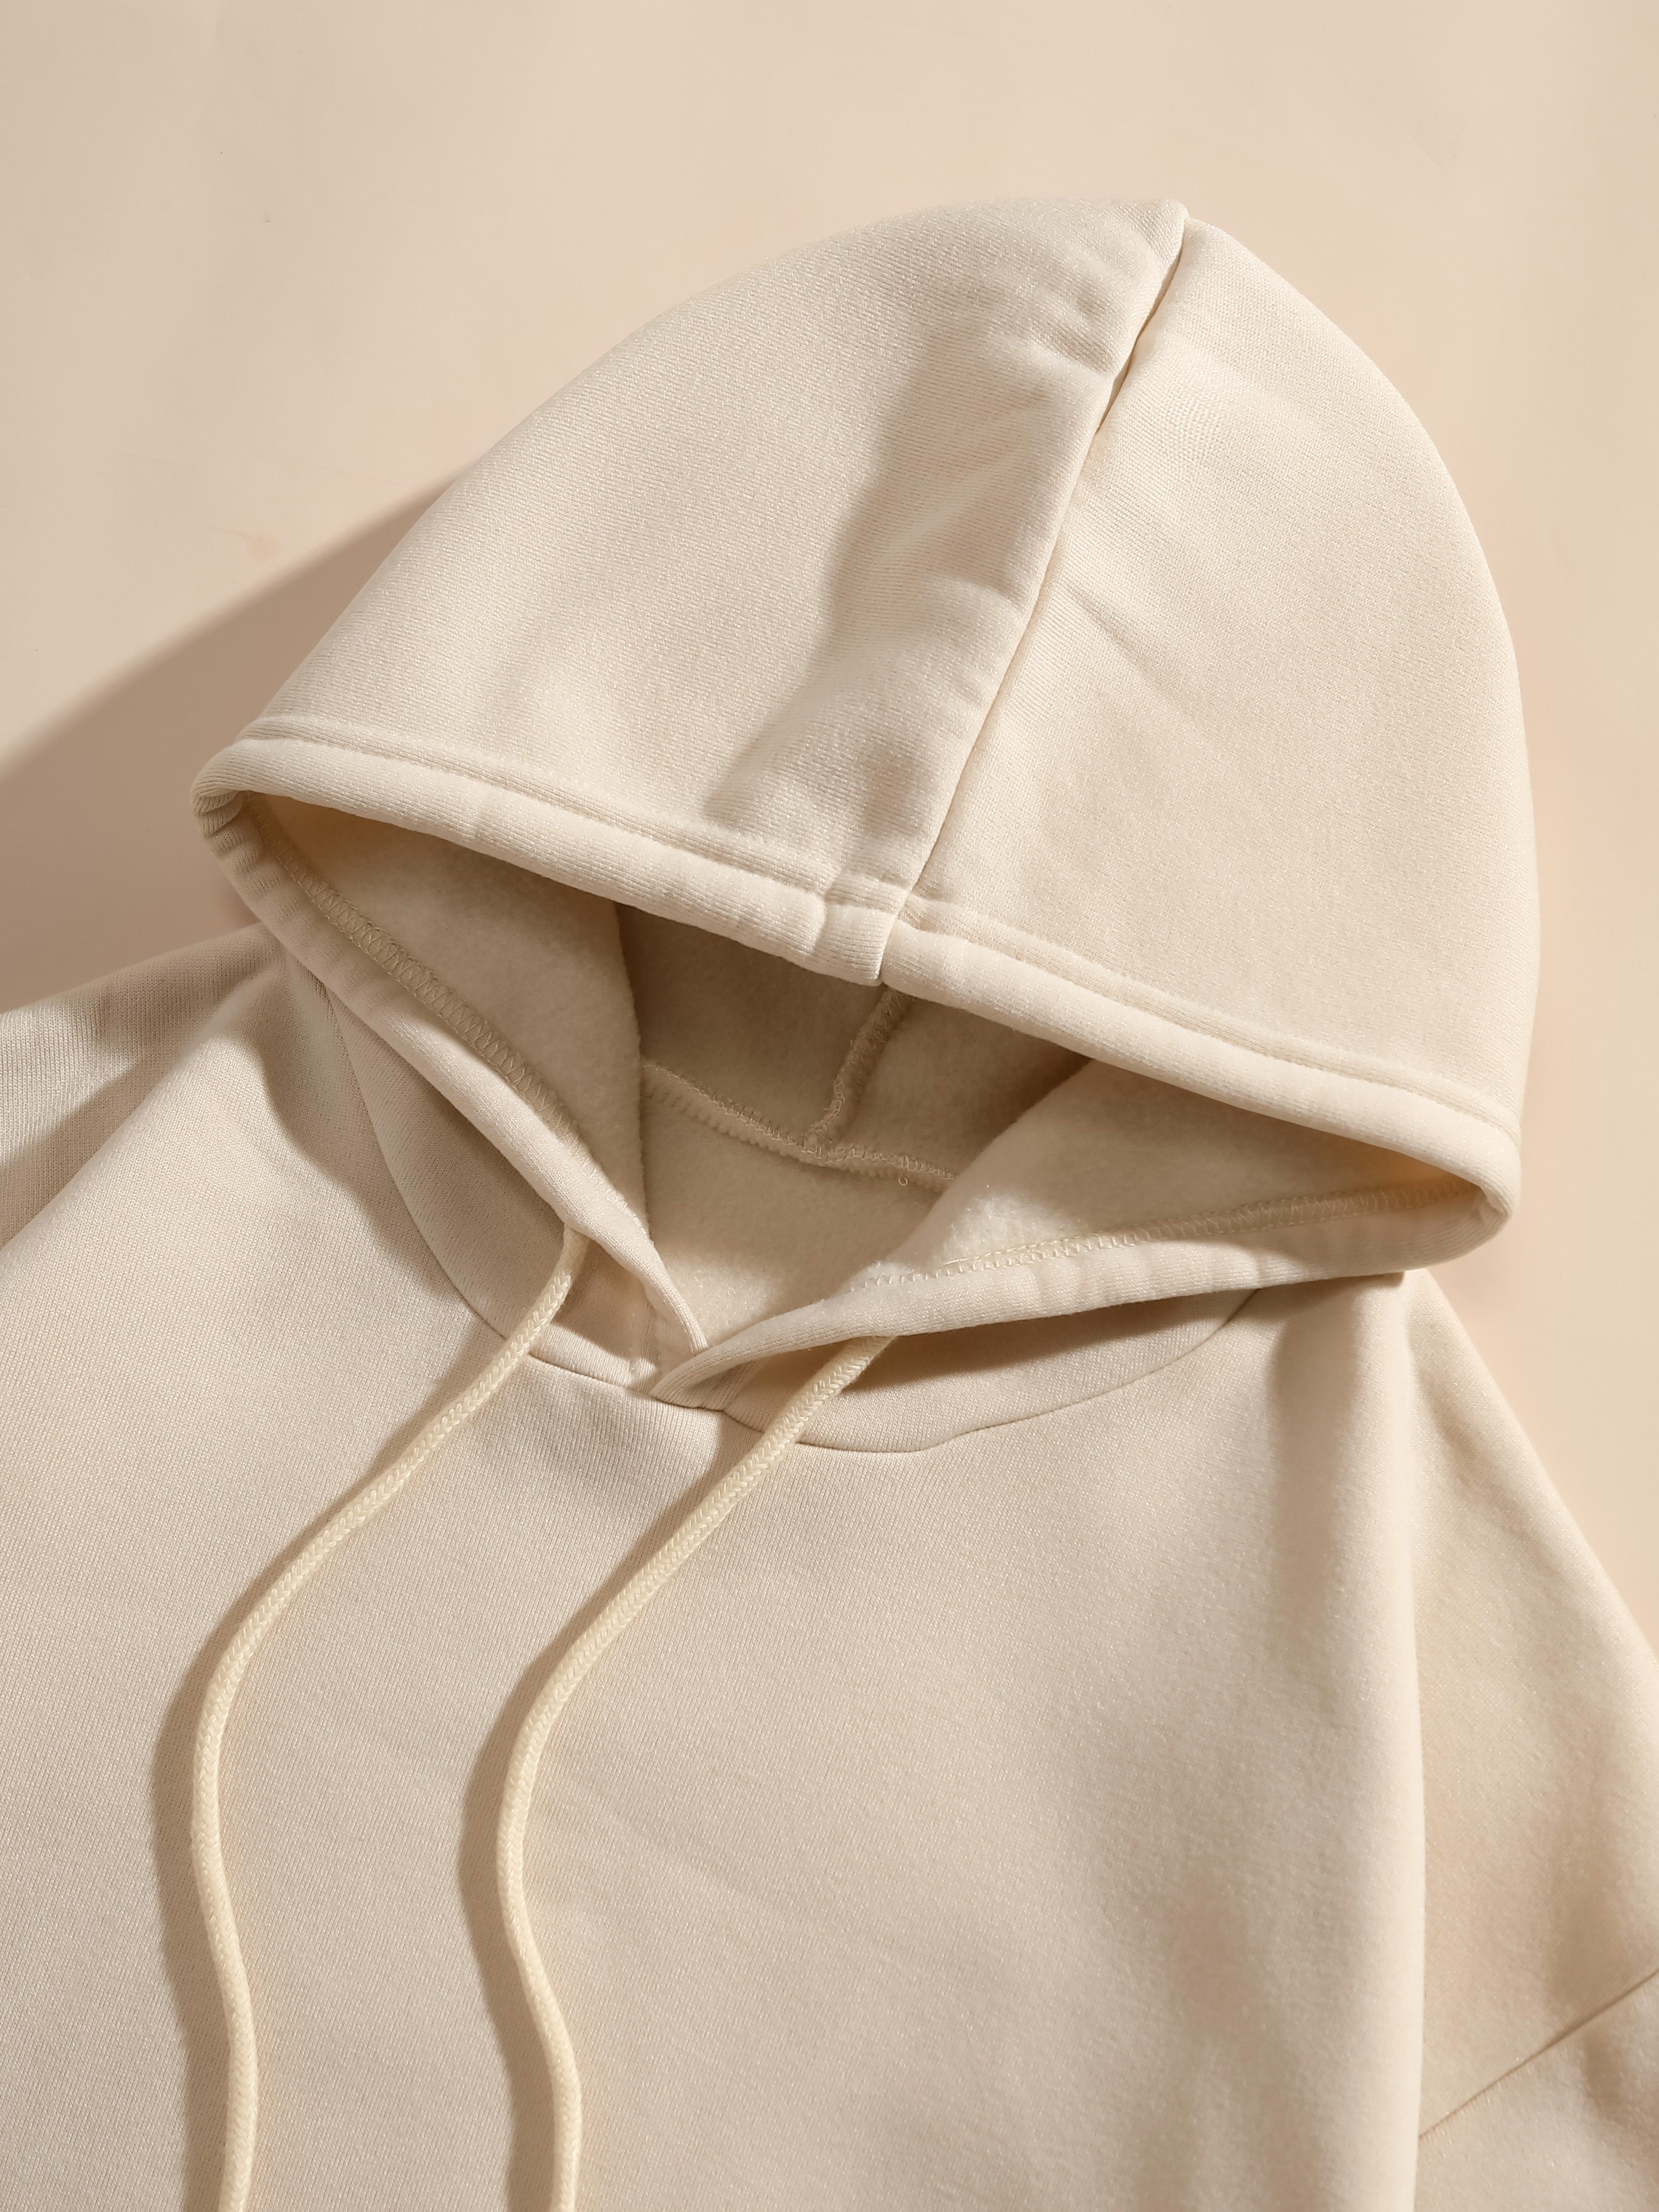 Zip Up Graphic Print Hoodies, Casual Long Sleeve Kangaroo Pocket  Sweatshirt, Women's Clothing